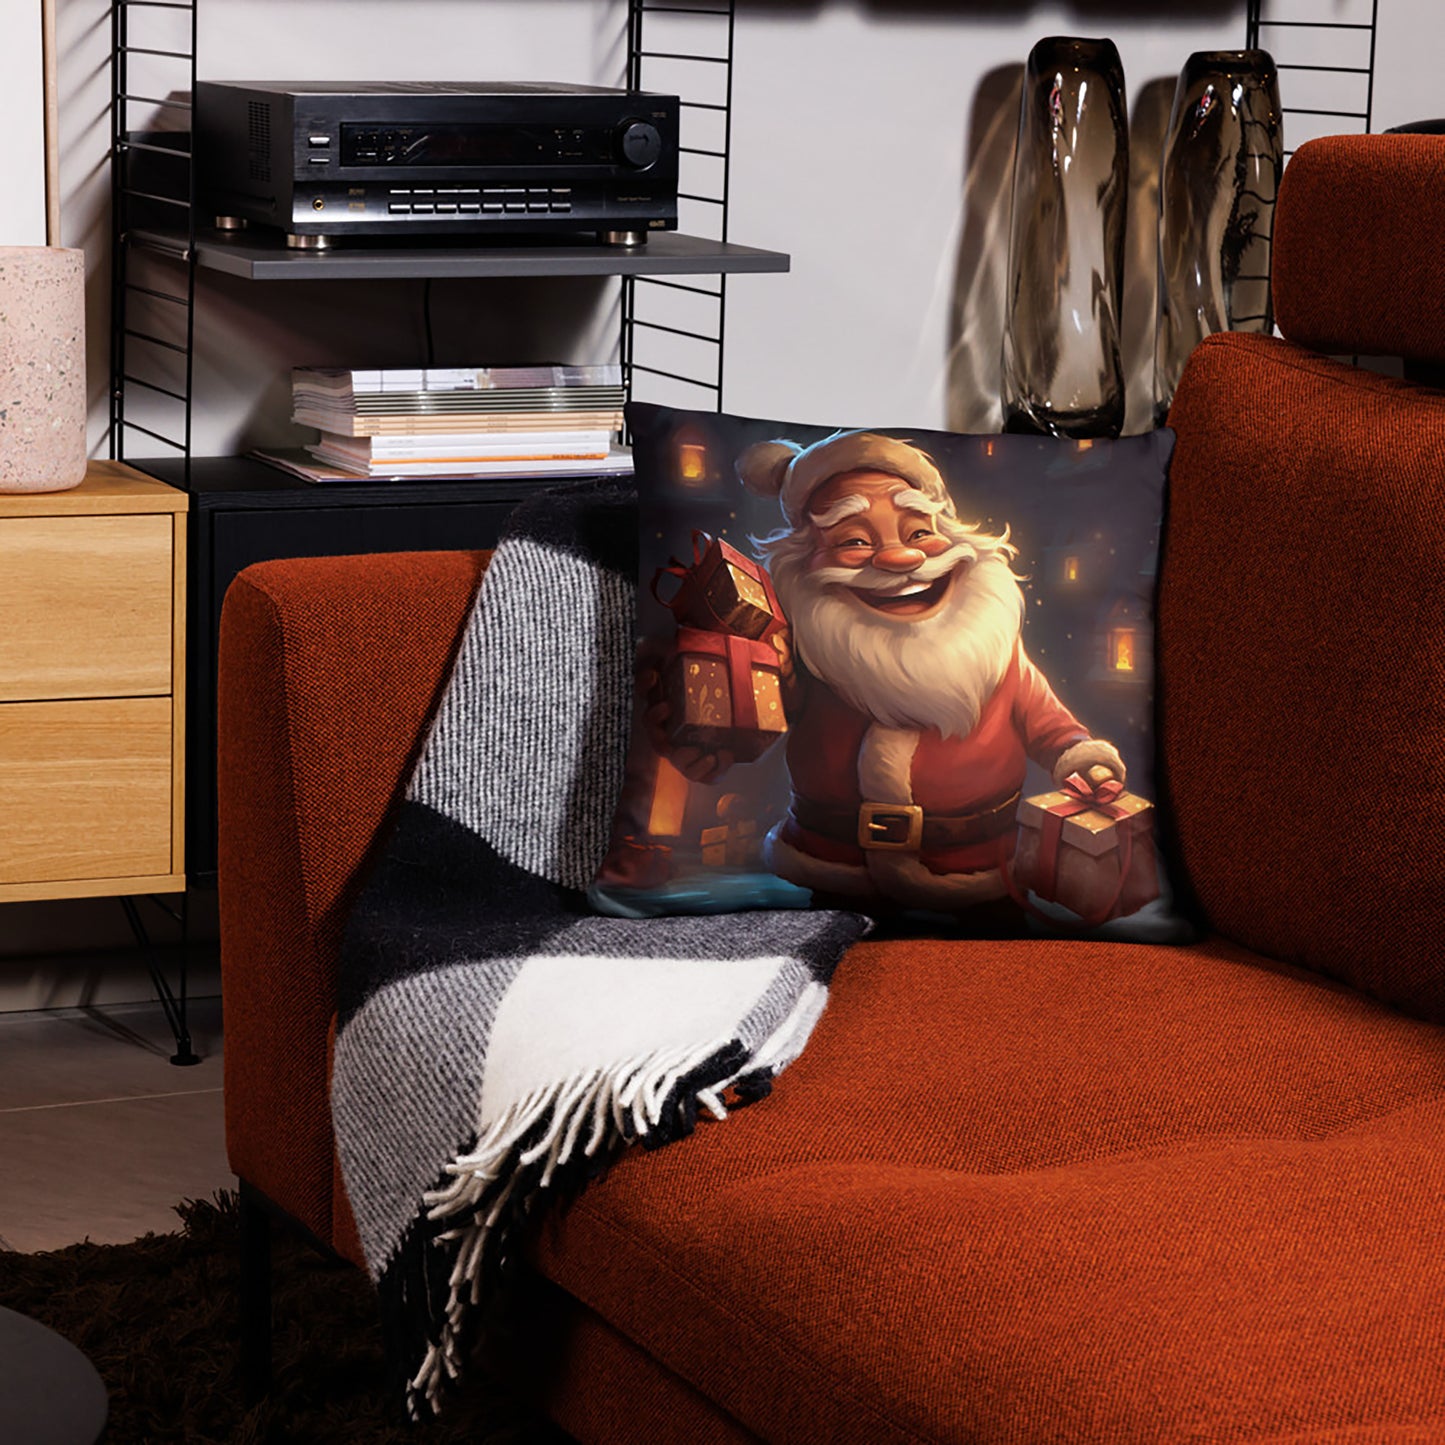 Christmas Throw Pillow Jolly Santa's Night Polyester Decorative Cushion 18x18